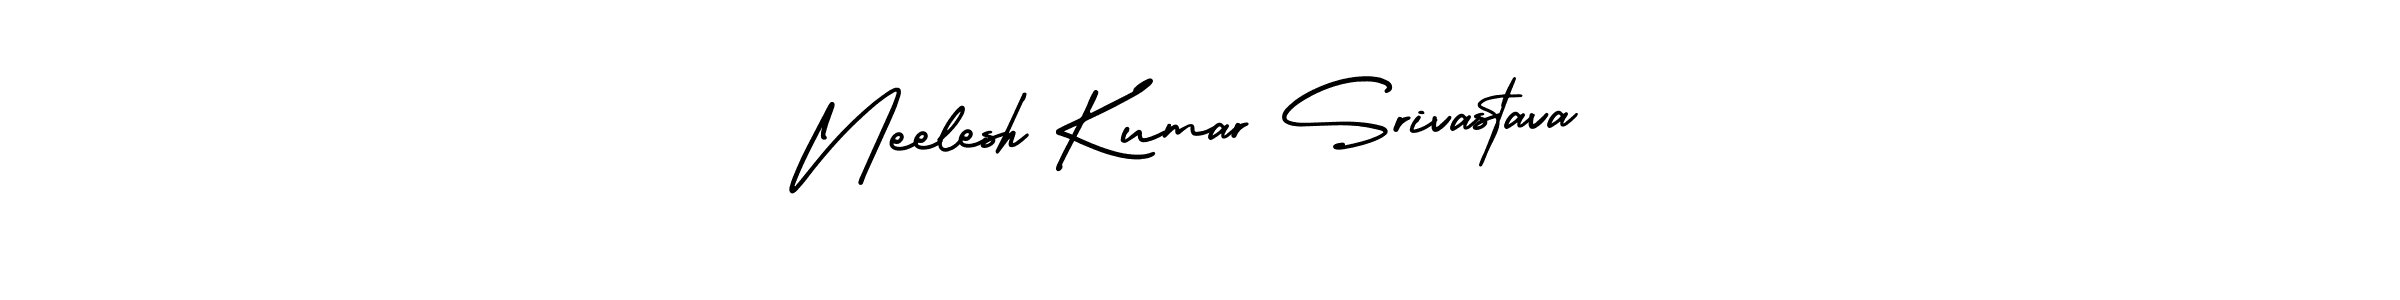 Best and Professional Signature Style for Neelesh Kumar Srivastava. AmerikaSignatureDemo-Regular Best Signature Style Collection. Neelesh Kumar Srivastava signature style 3 images and pictures png